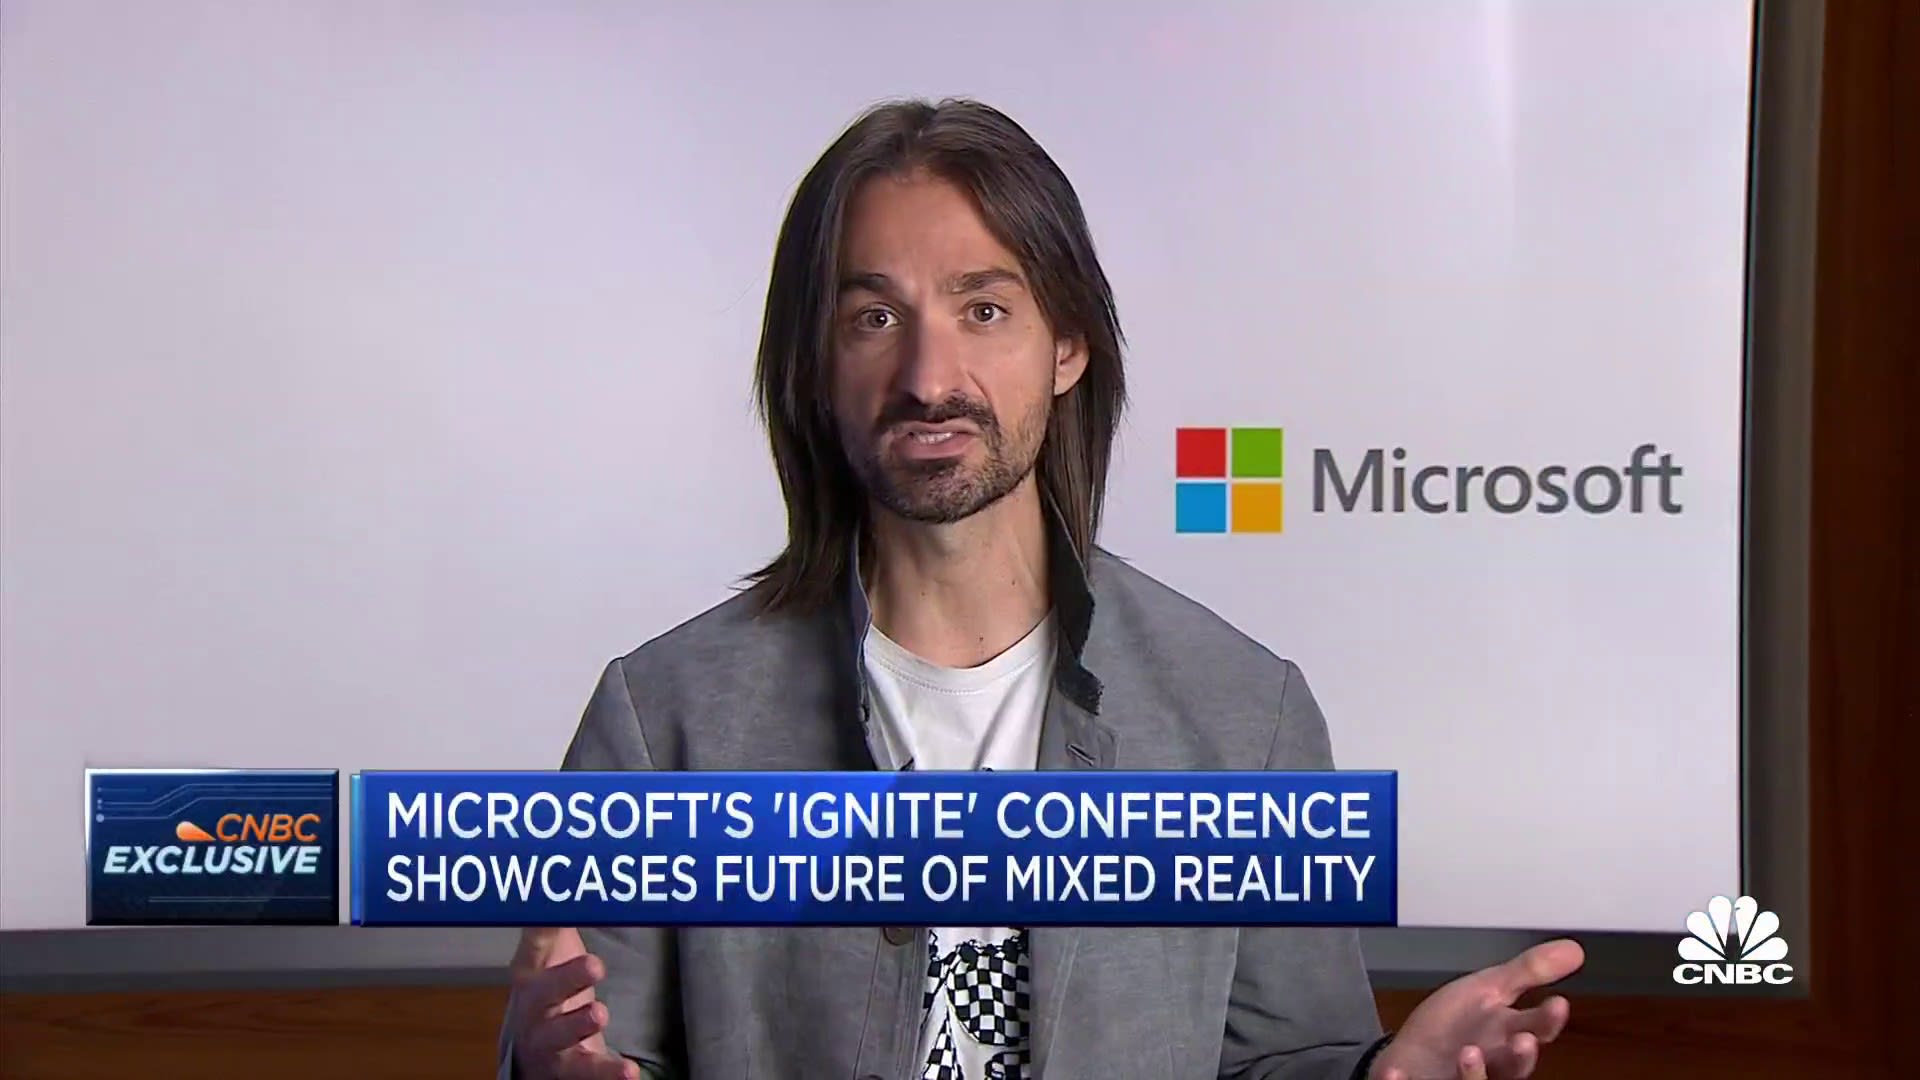 Microsoft’s Alex Kipman on the future of mixed reality